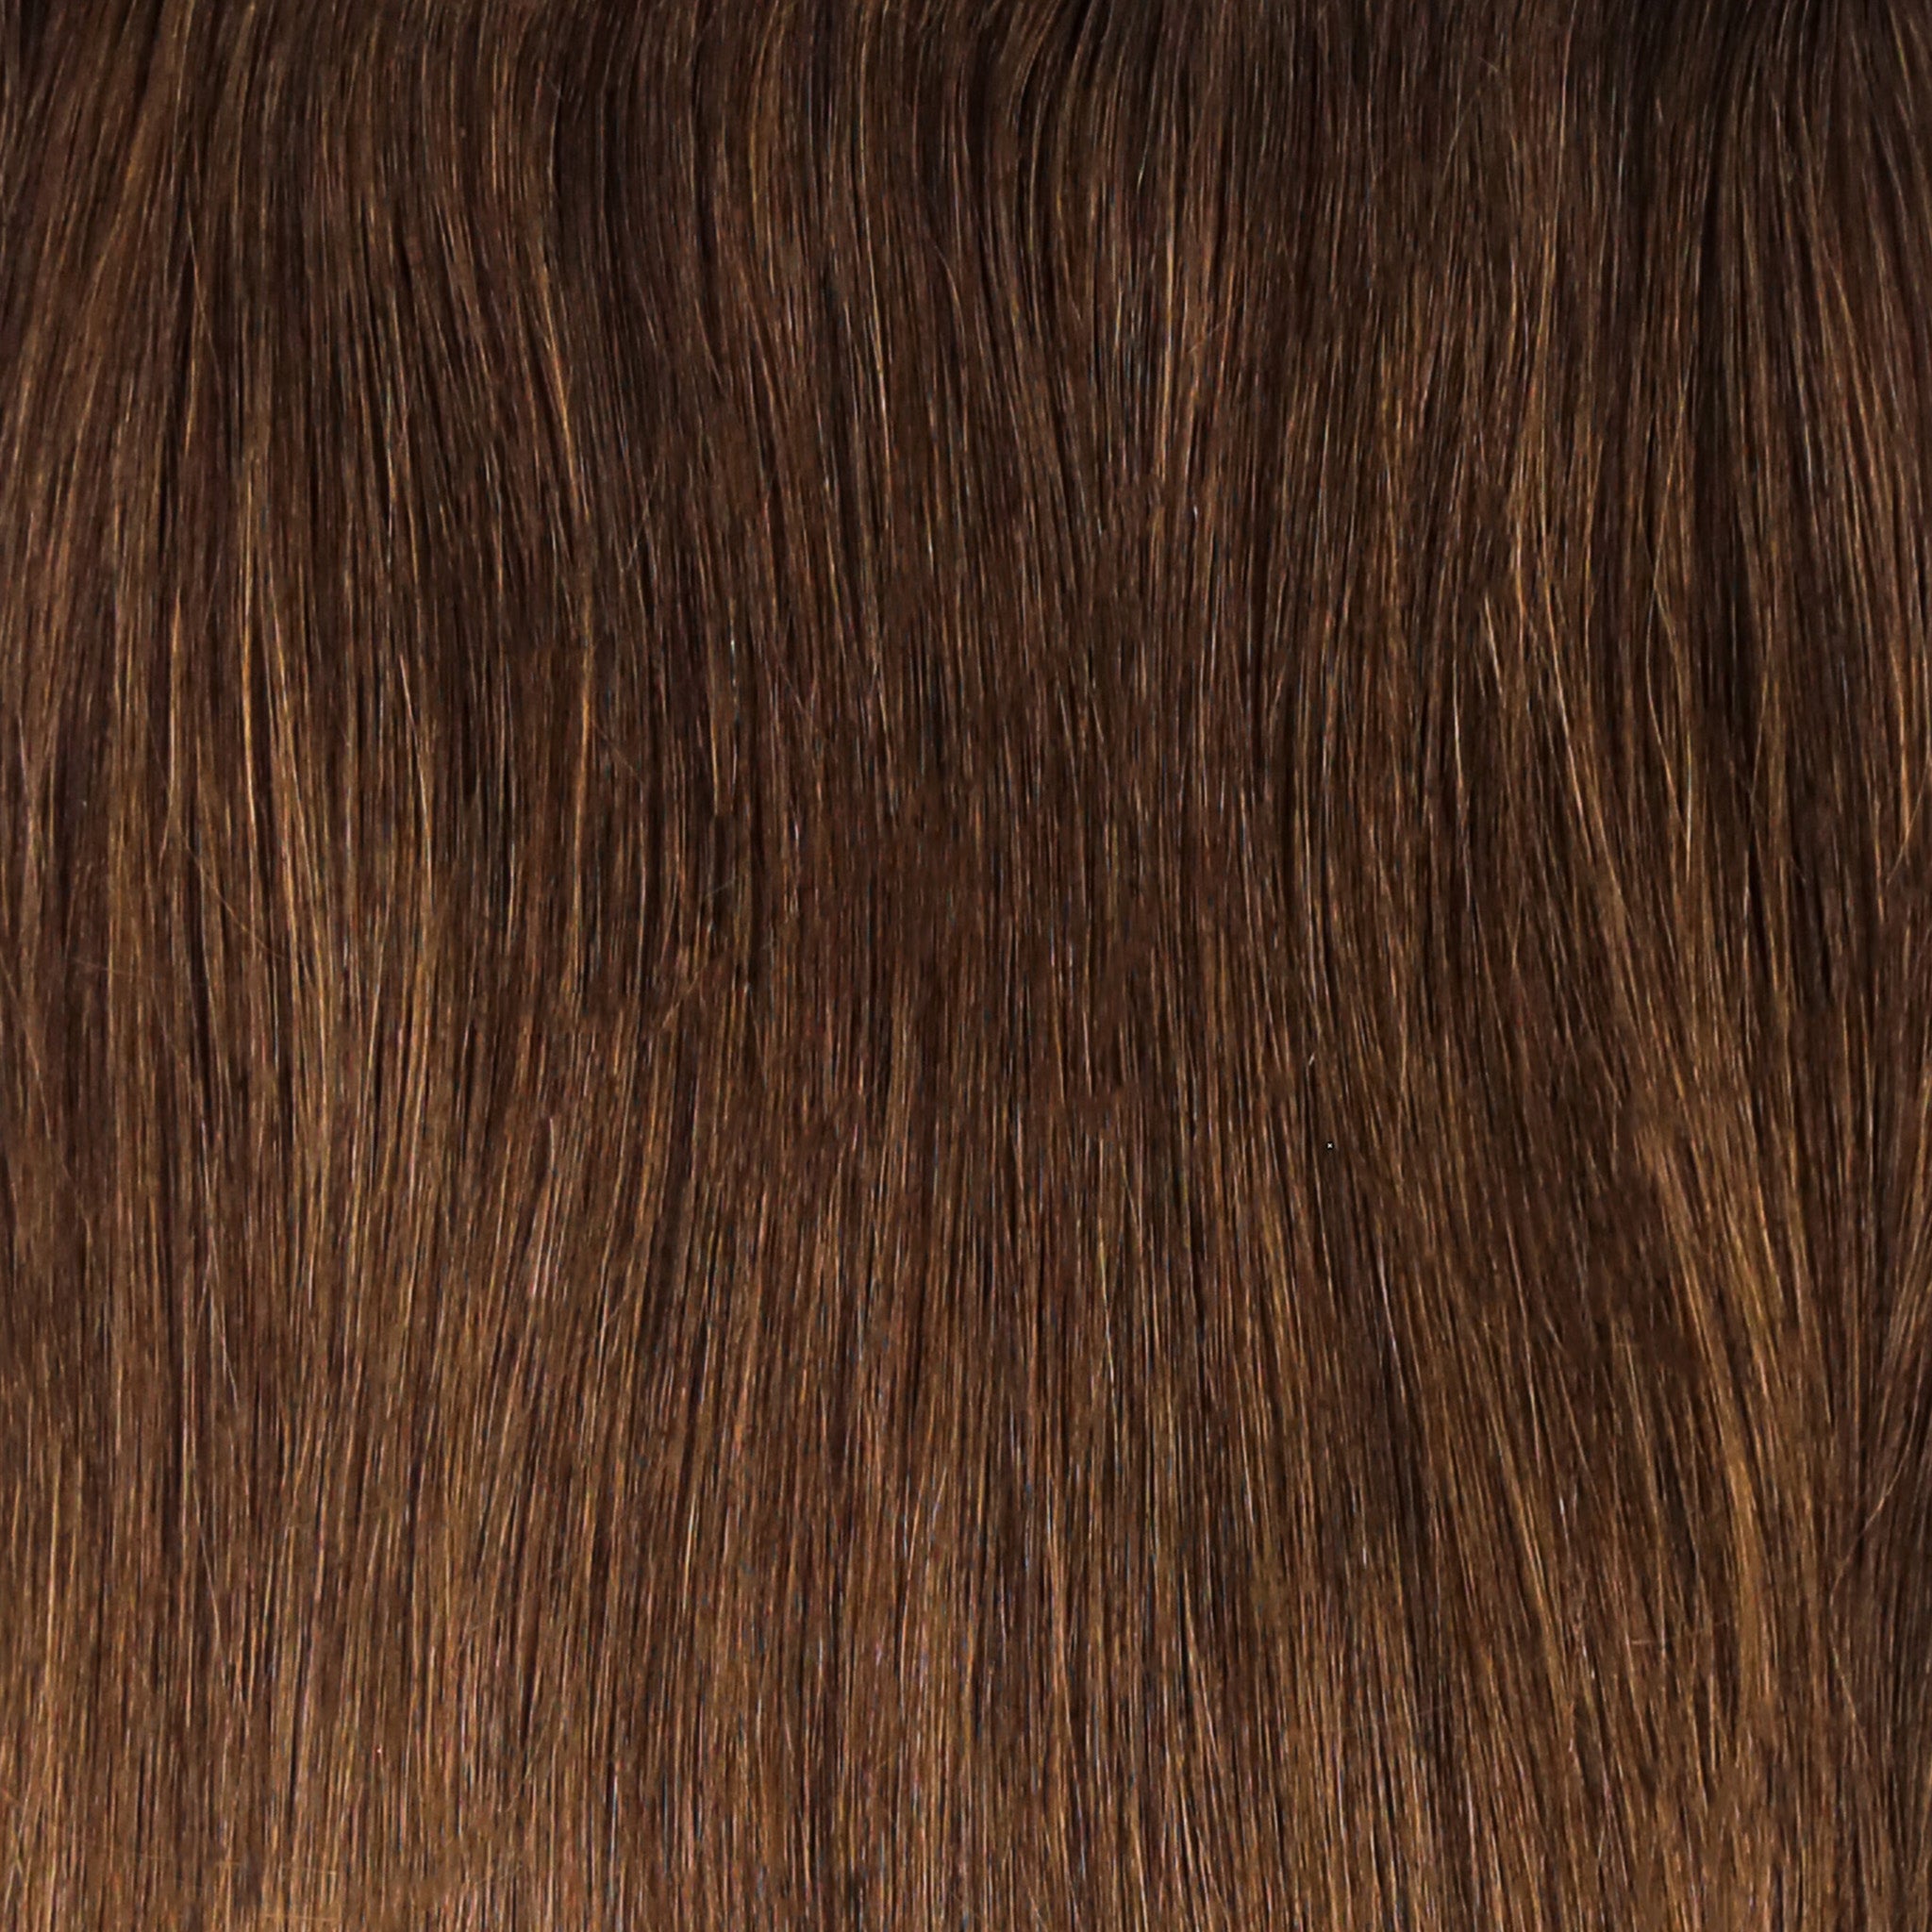 #2 Ponytail Hair Extension